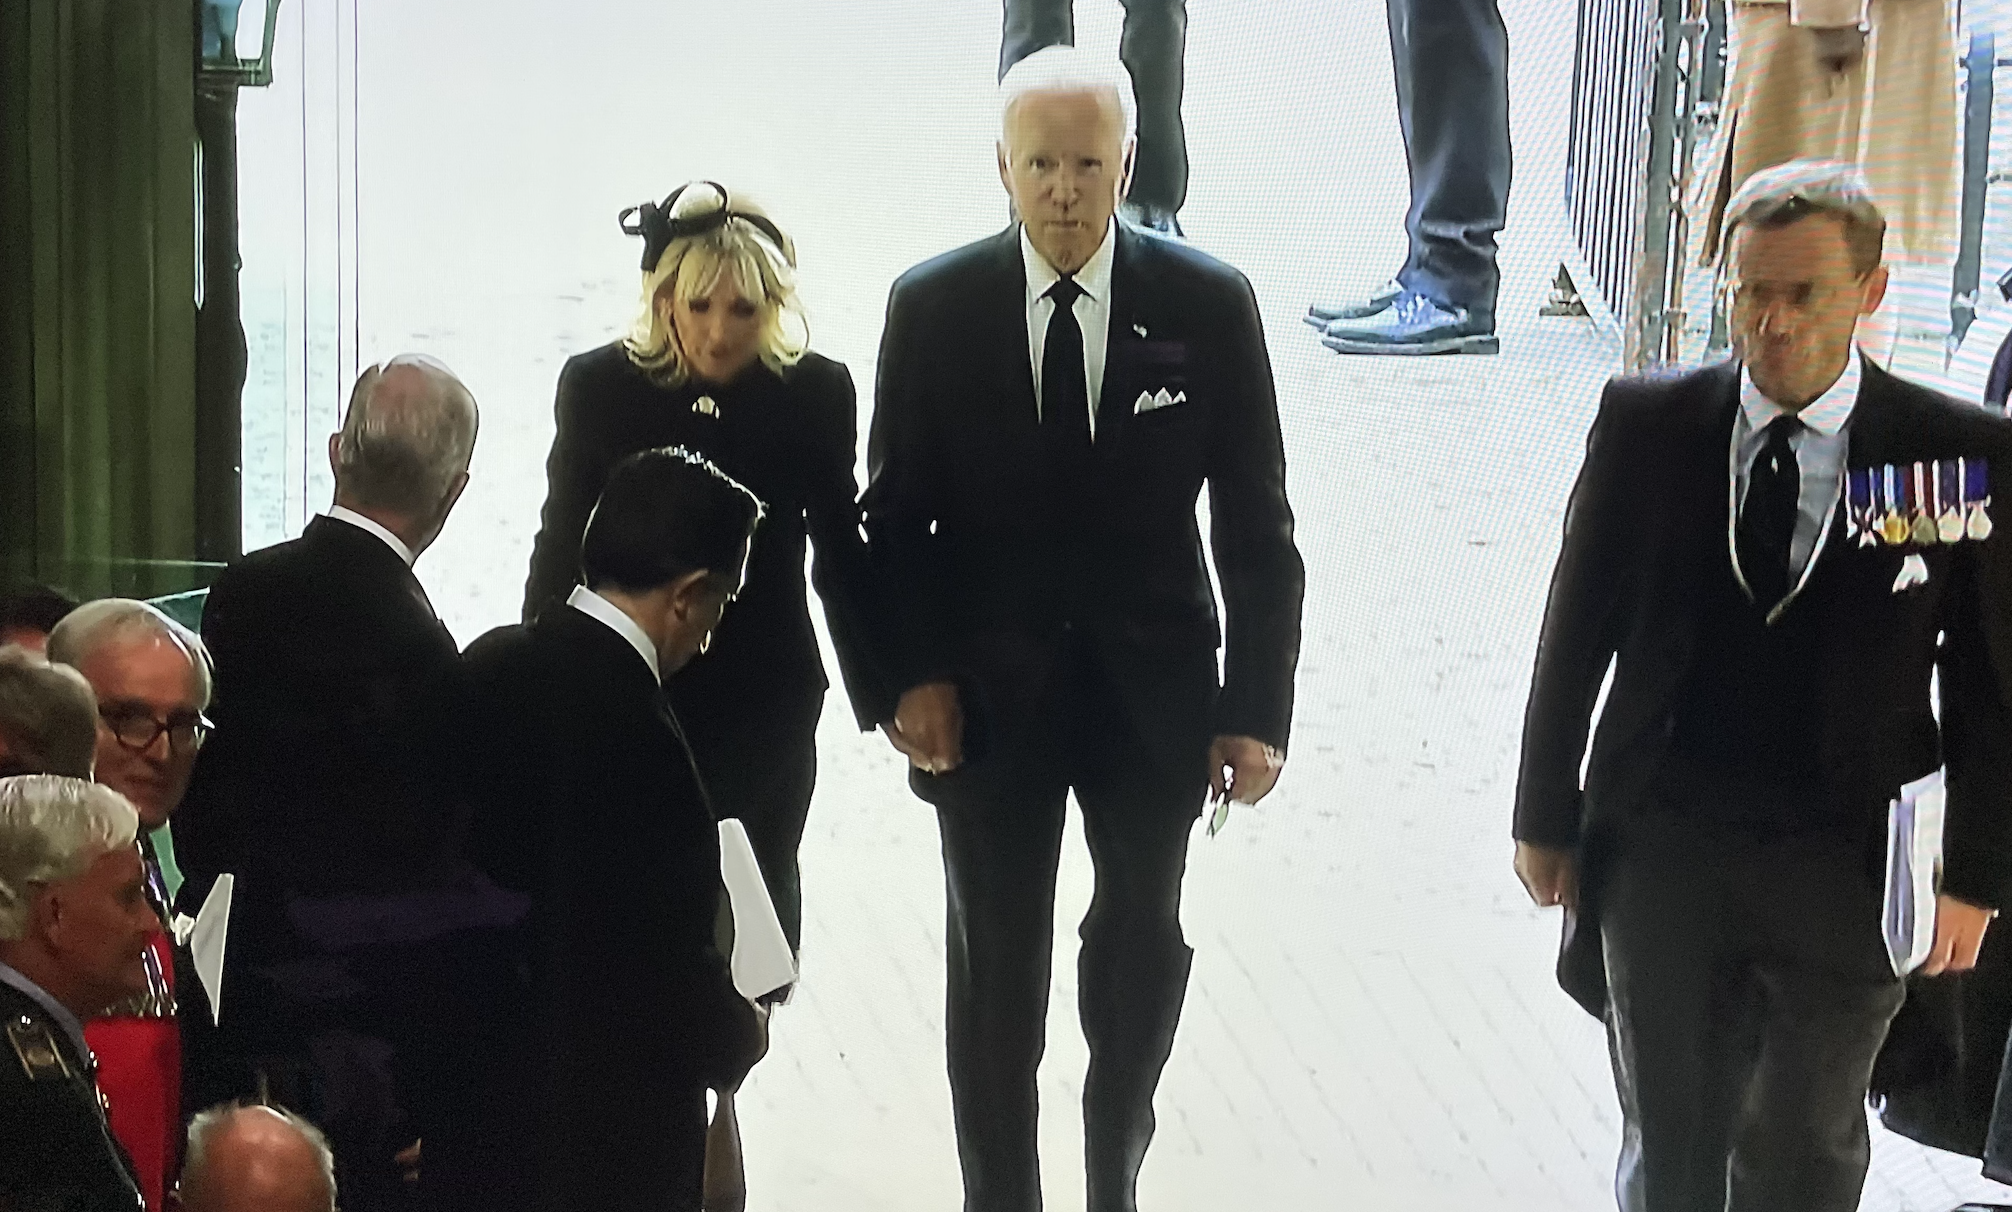 Joe Biden arriving at Westminster Abbey.